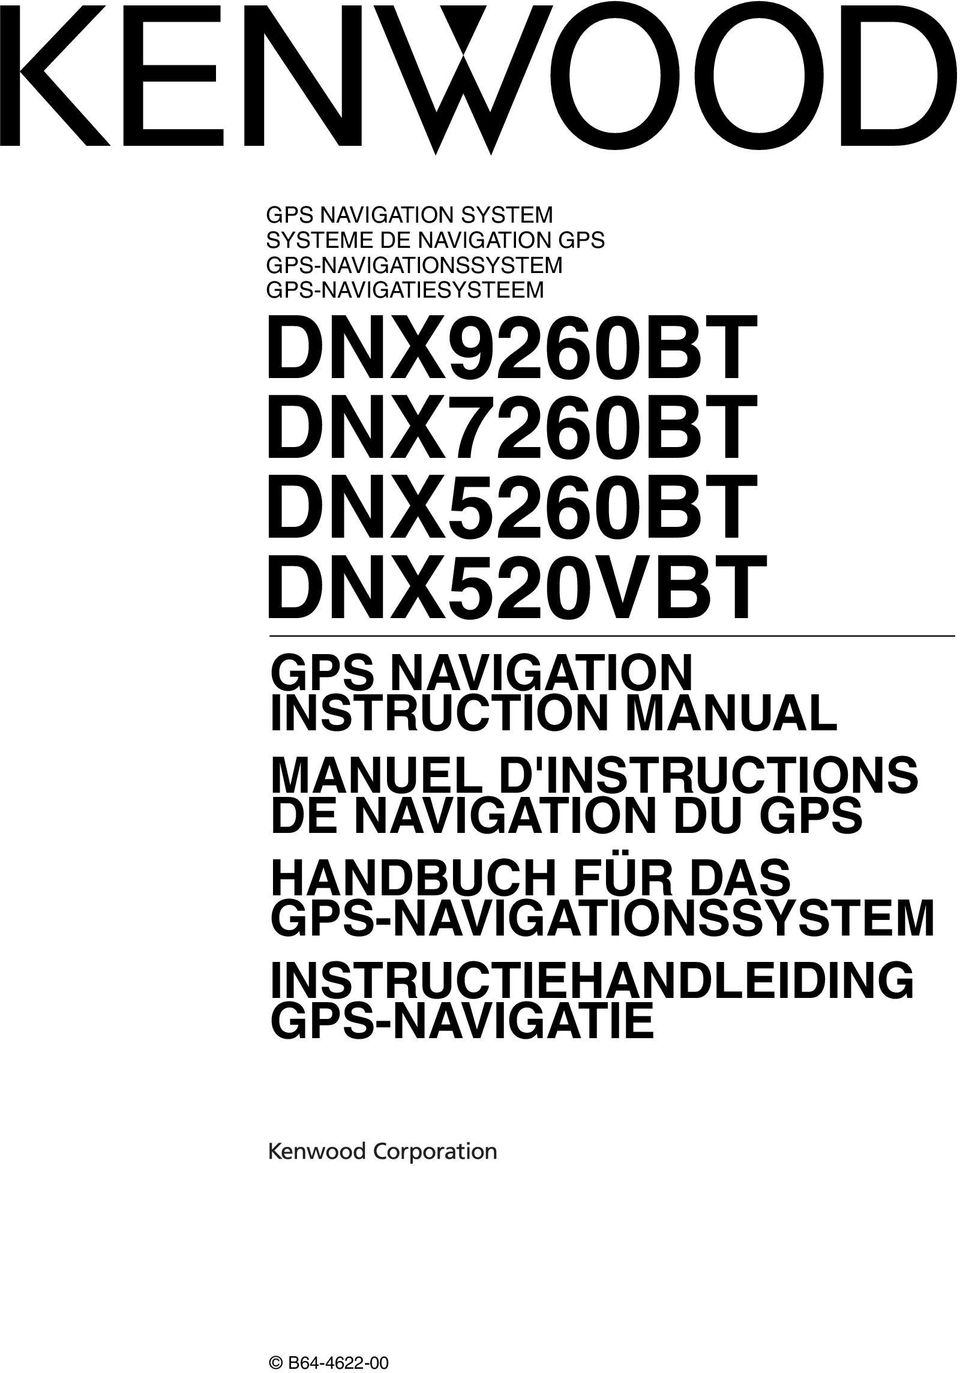 NAVIGATION INSTRUCTION MANUAL MANUEL D'INSTRUCTIONS DE NAVIGATION DU GPS